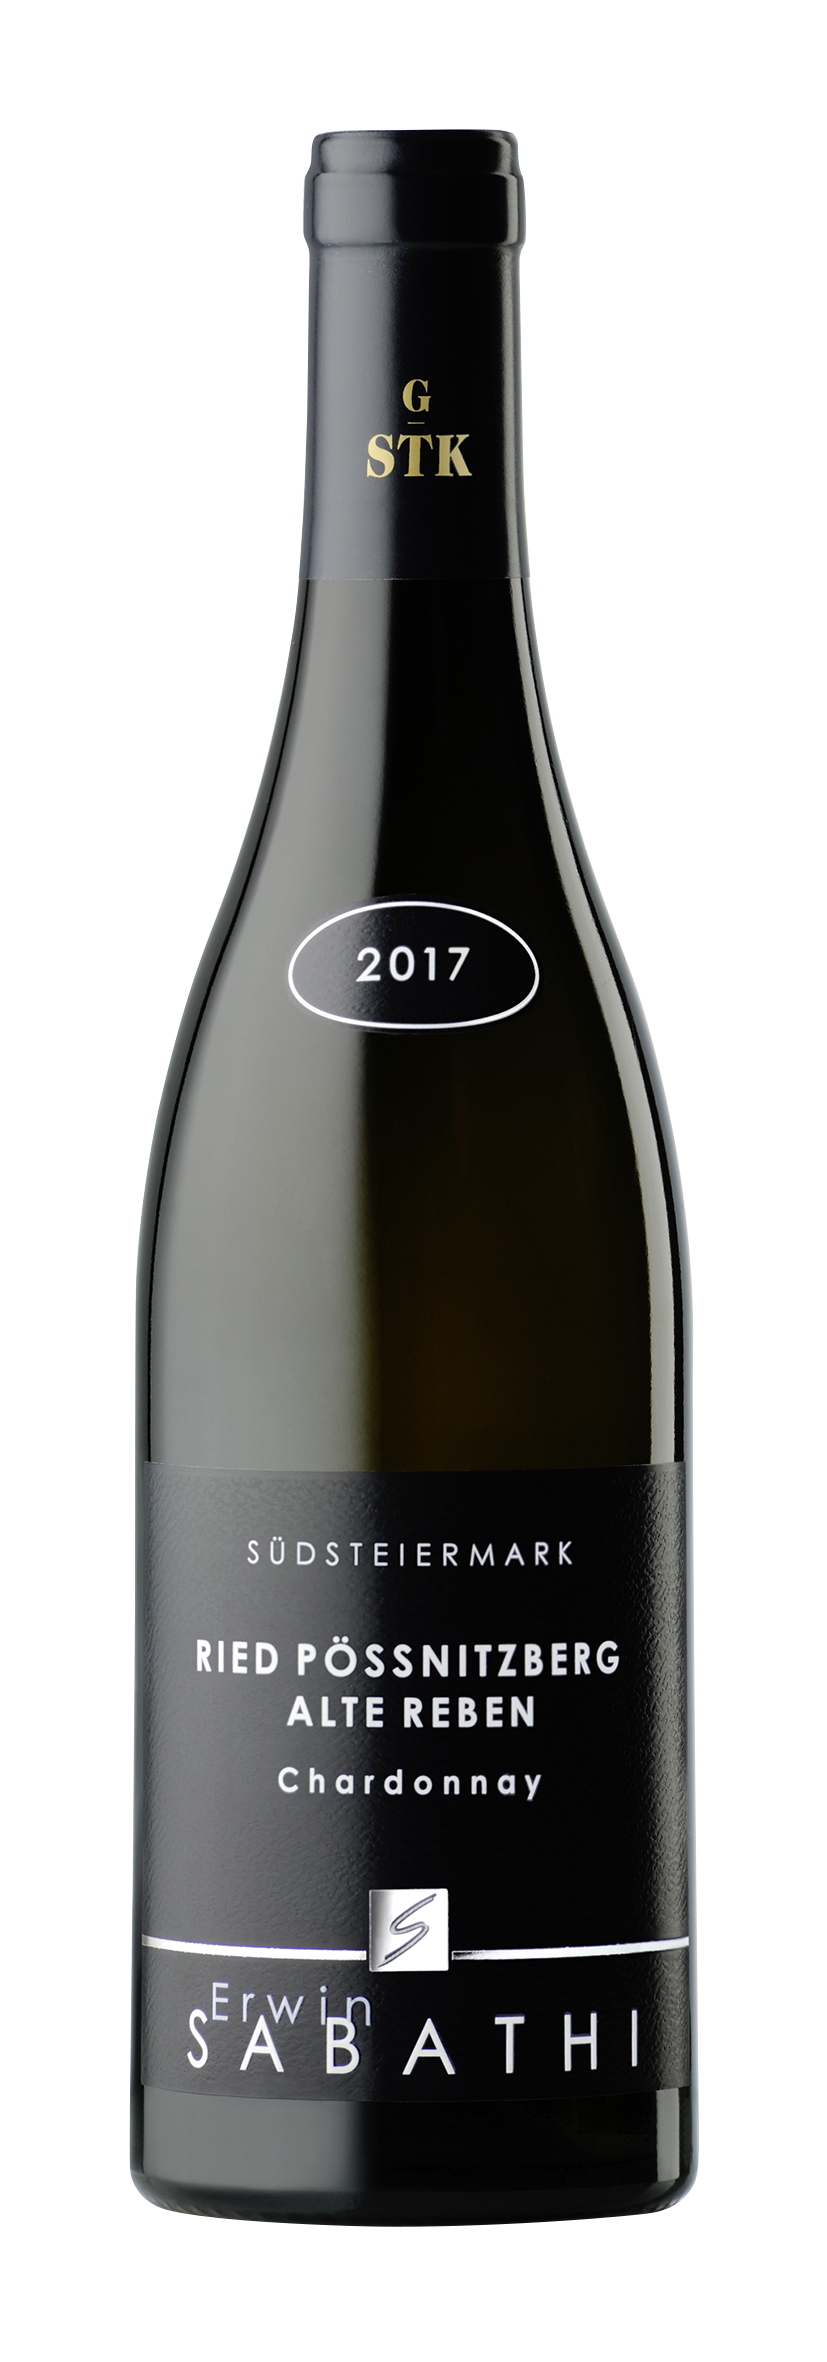 Südsteiermark DAC Ried Pössnitzberg Chardonnay Reserve Alte Reben Grosse STK Lage 2017